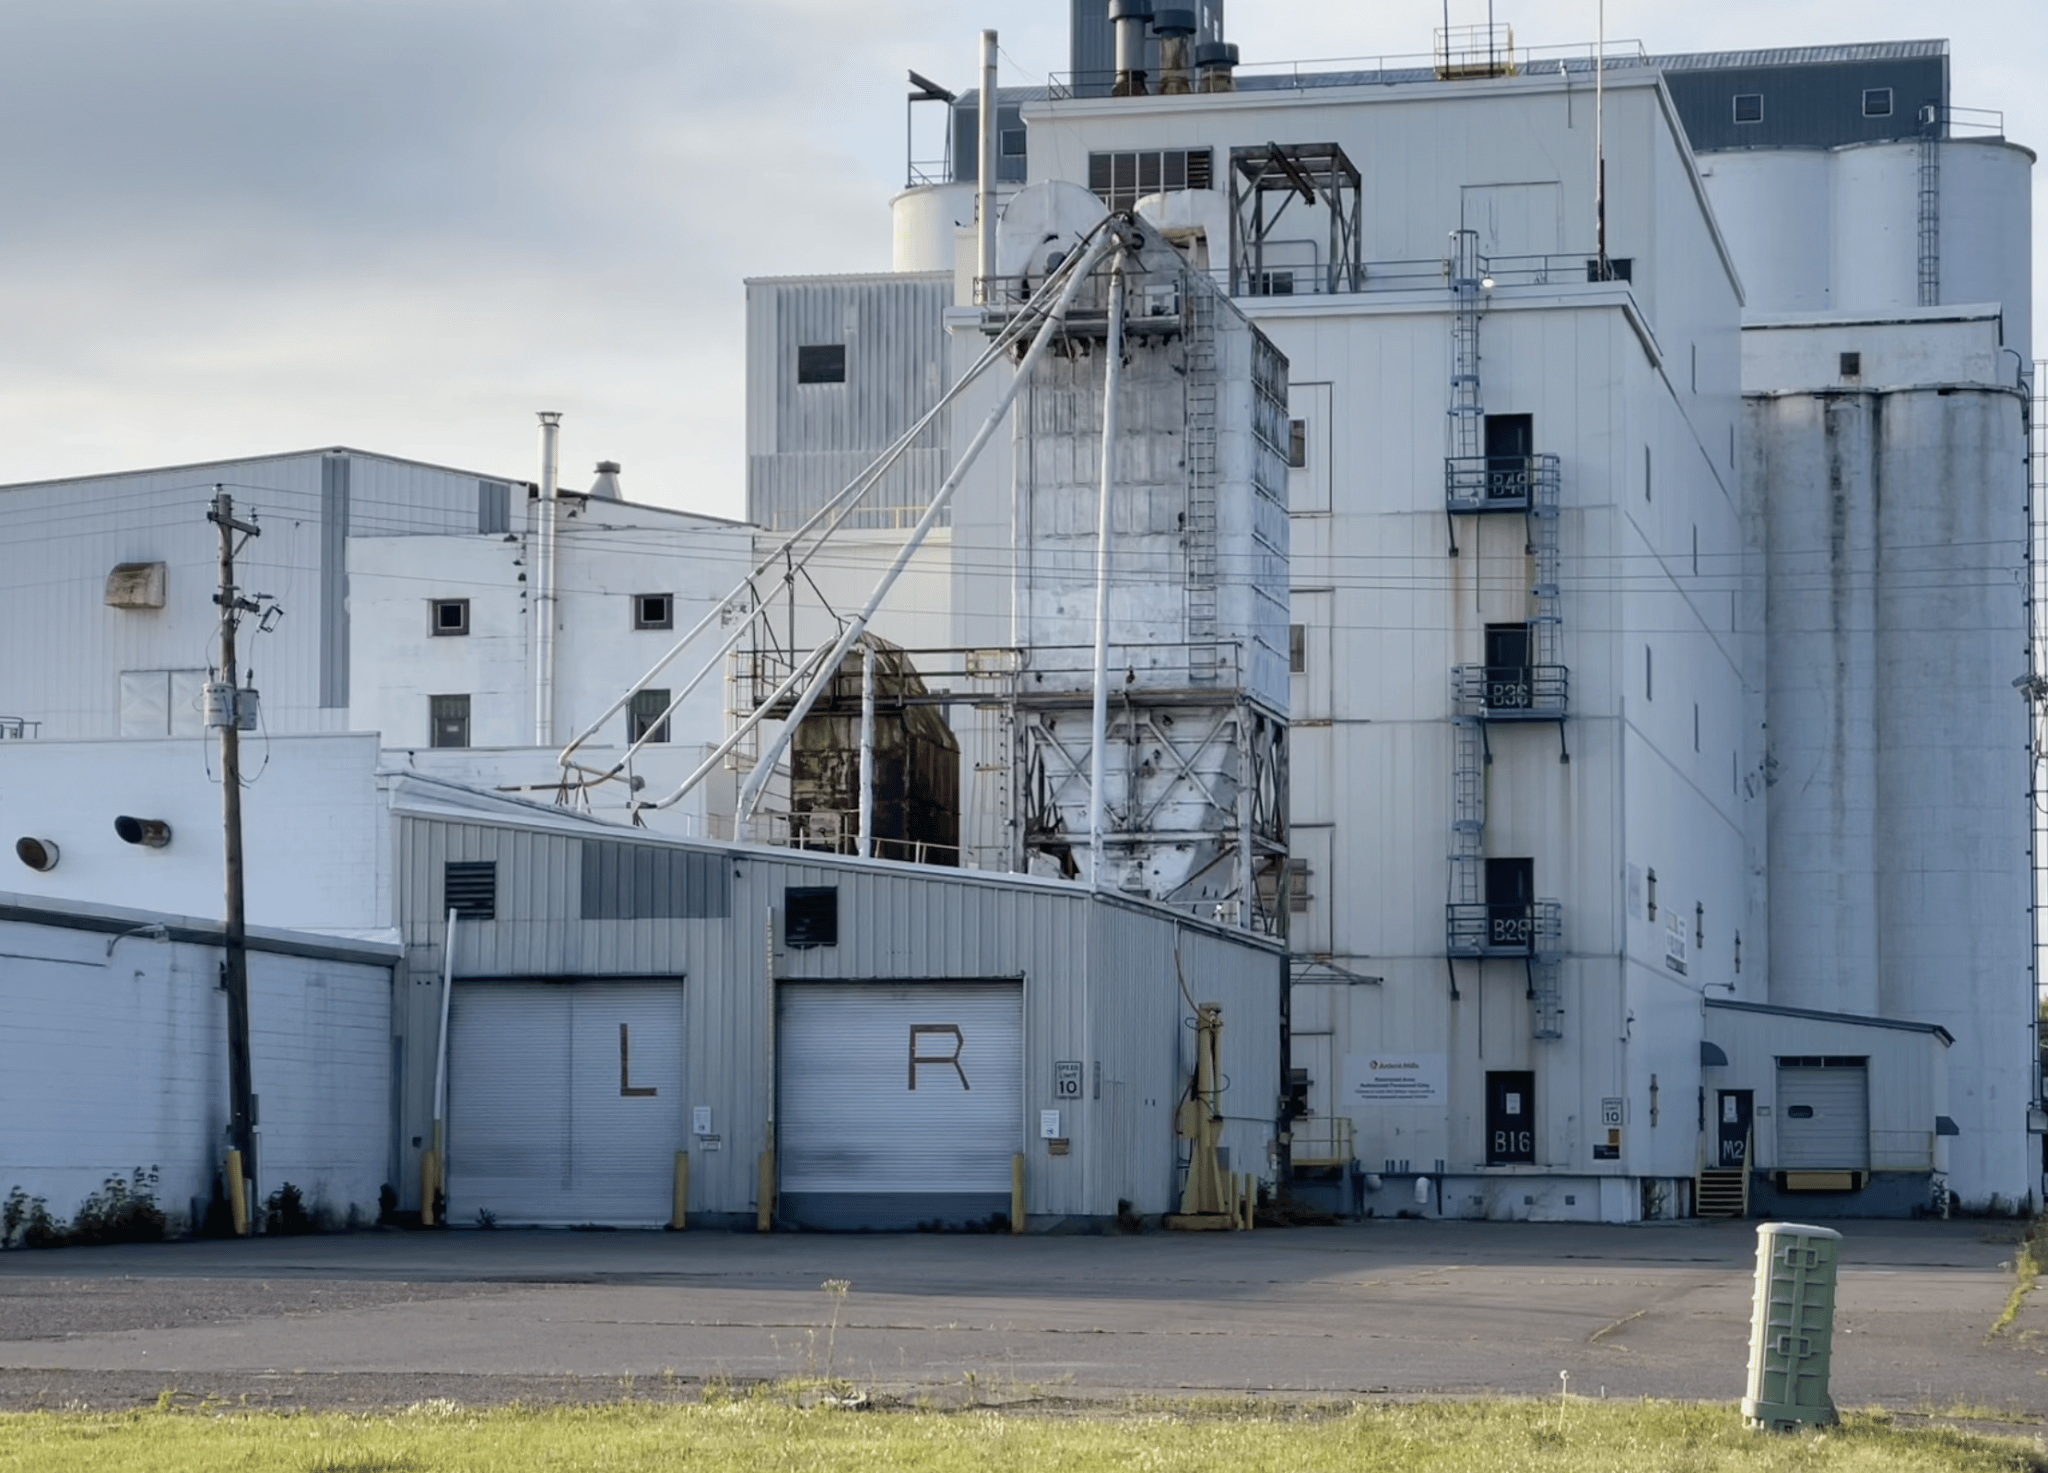 Closed Ardent Mills Flour, Rush City, Minnesota 